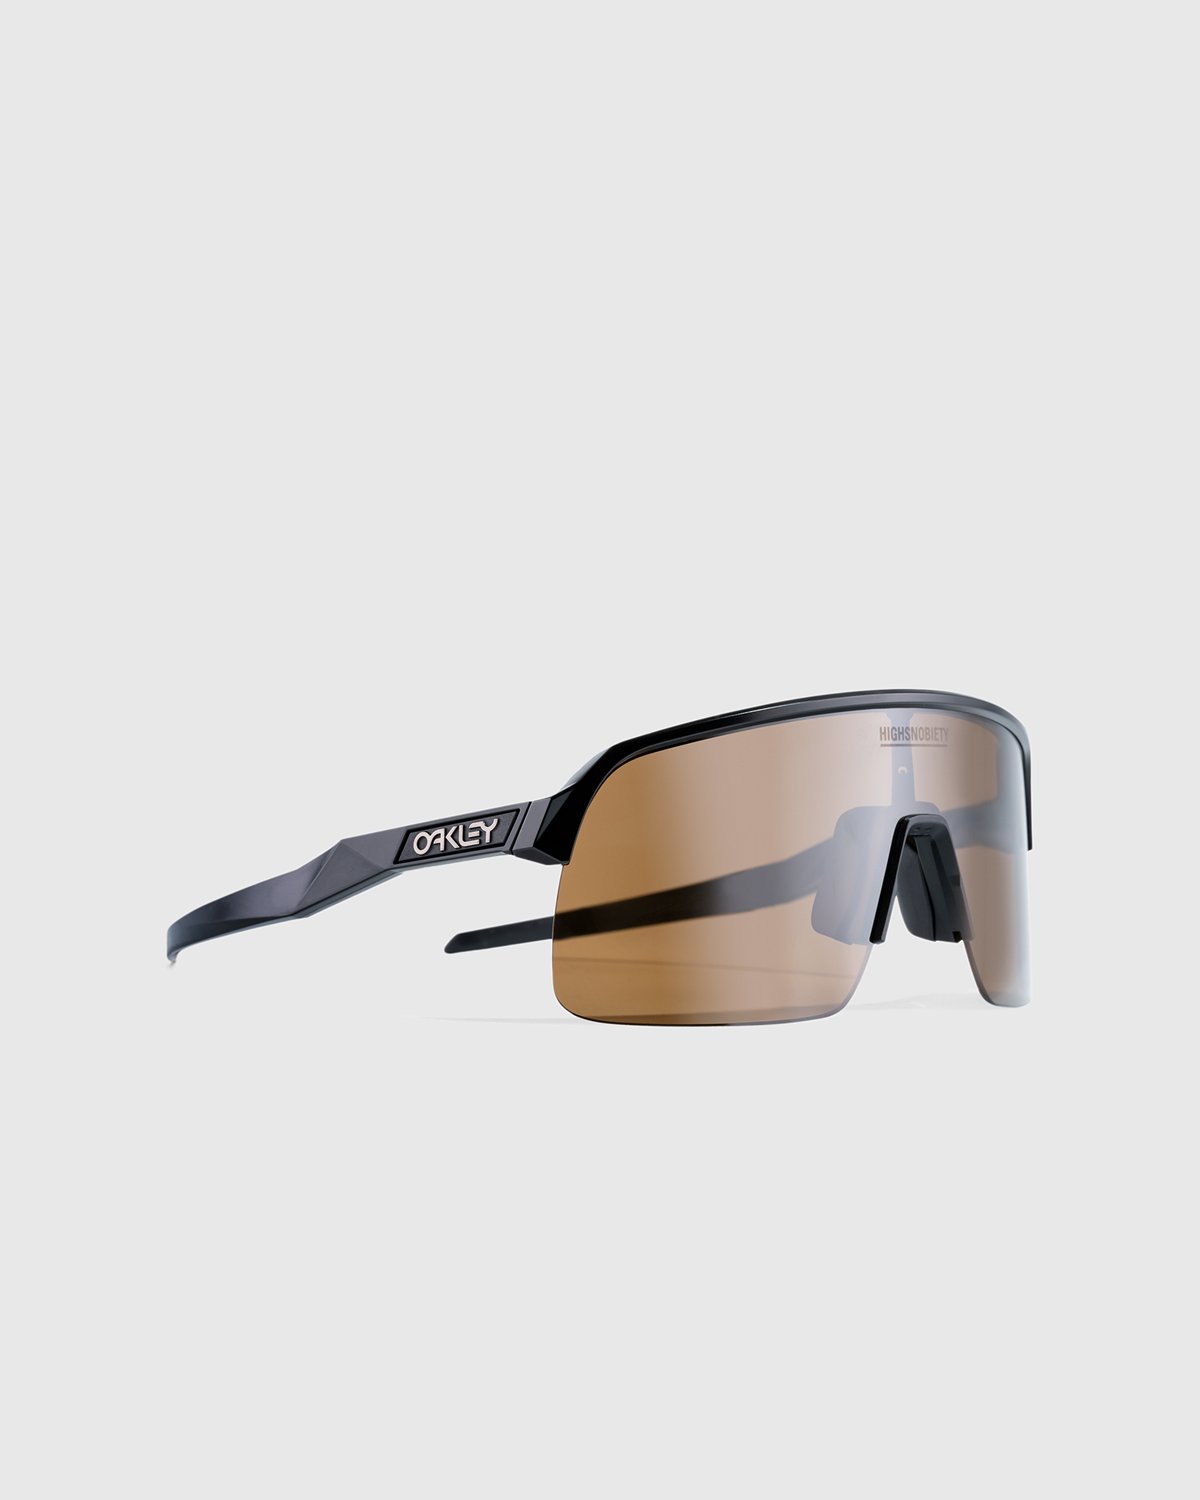 Oakley x Highsnobiety - SUTRO LITE BLACK - Sunglasses - Black - Image 2